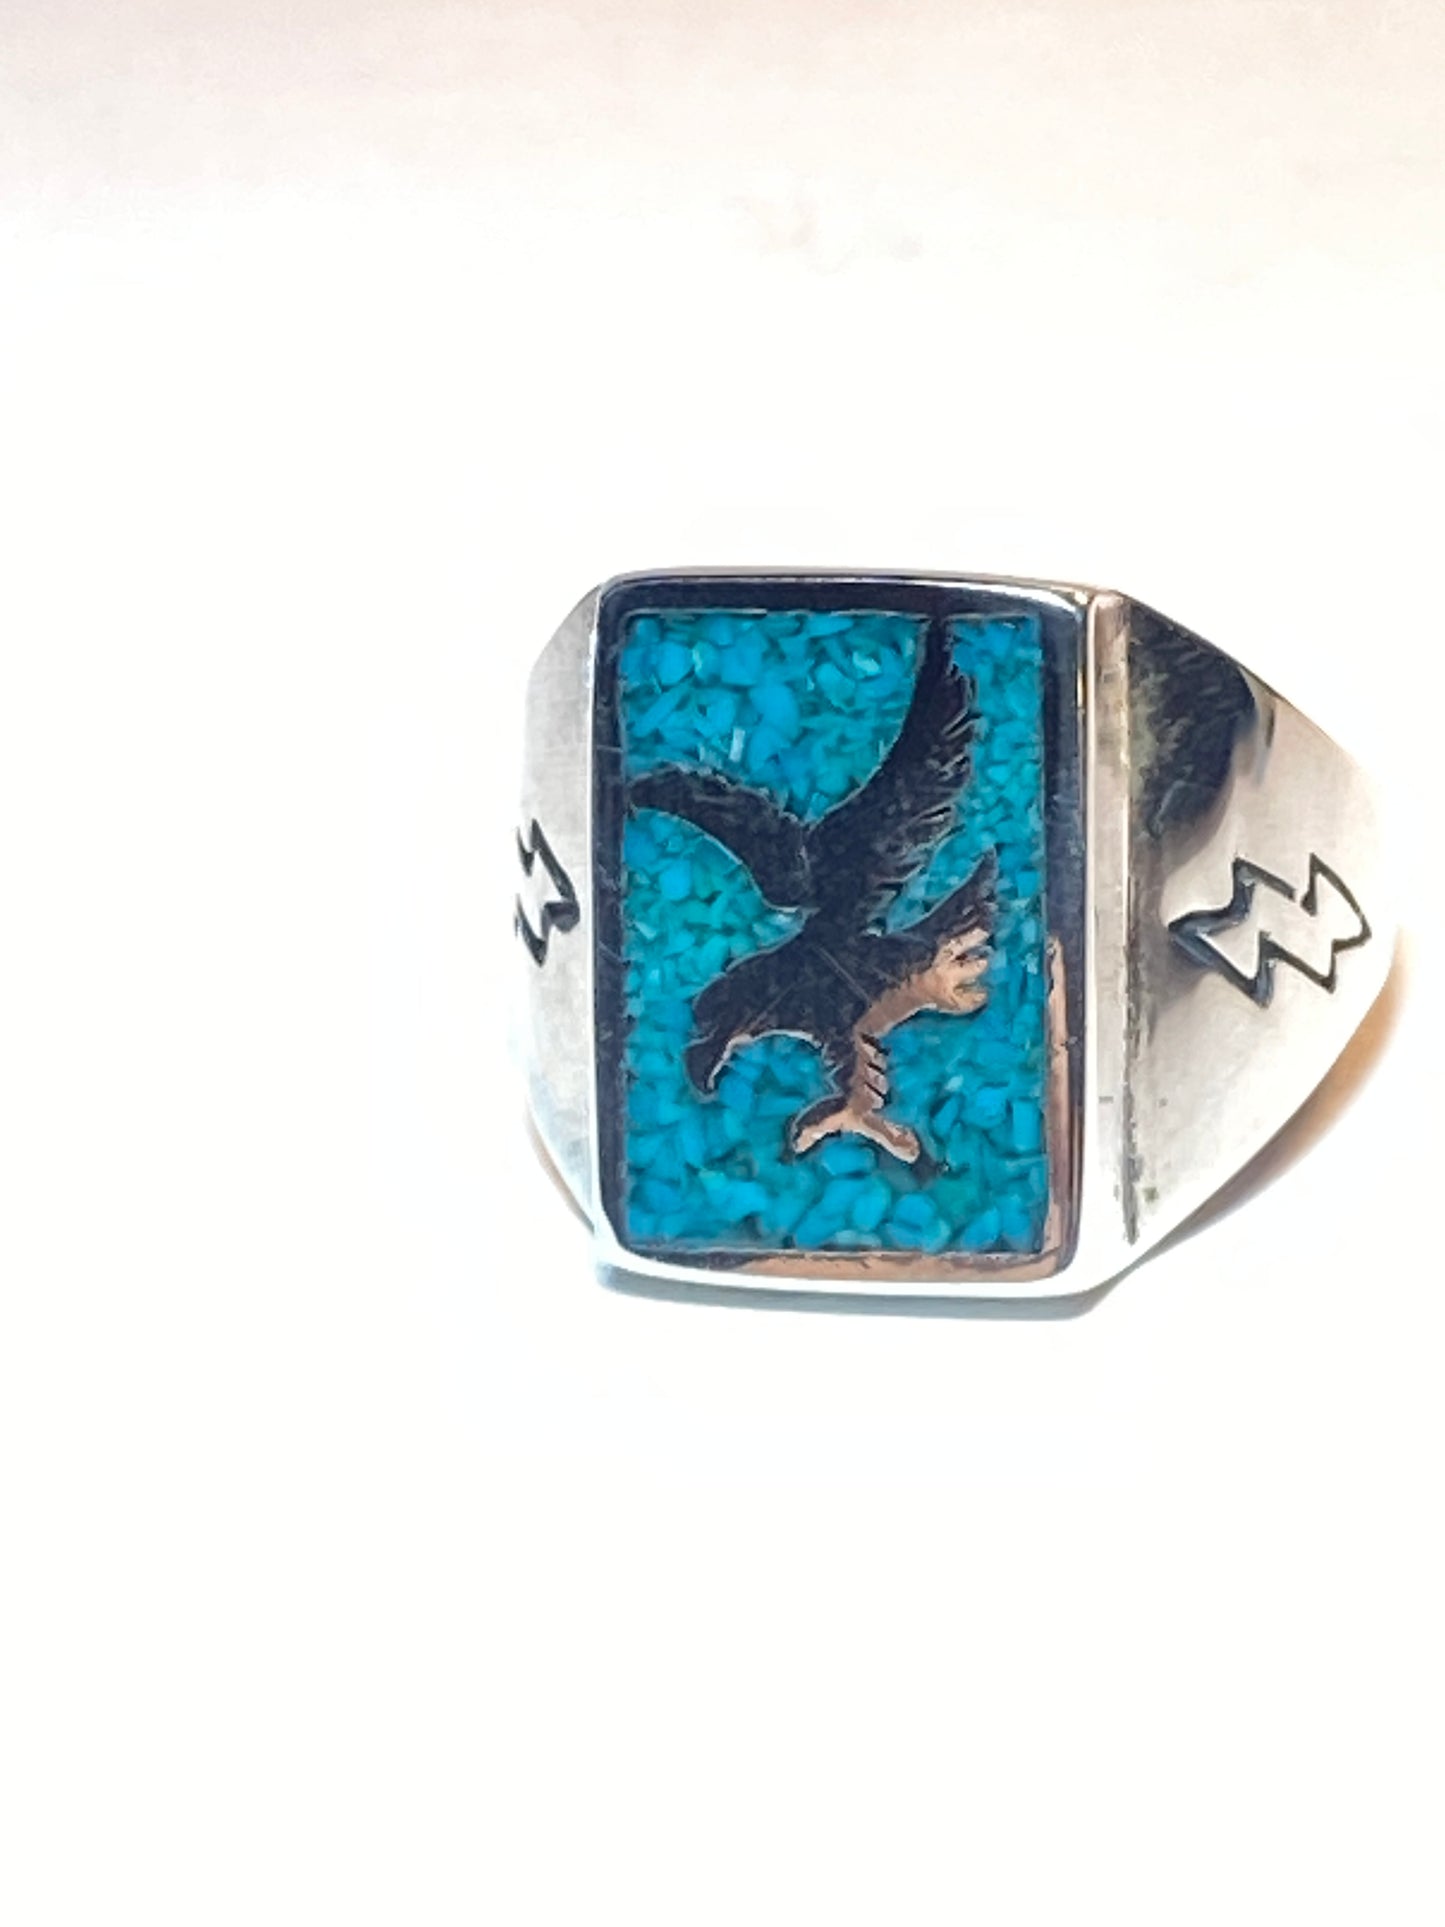 Eagle ring Turquoise chips lightening bolt southwest sterling silver women